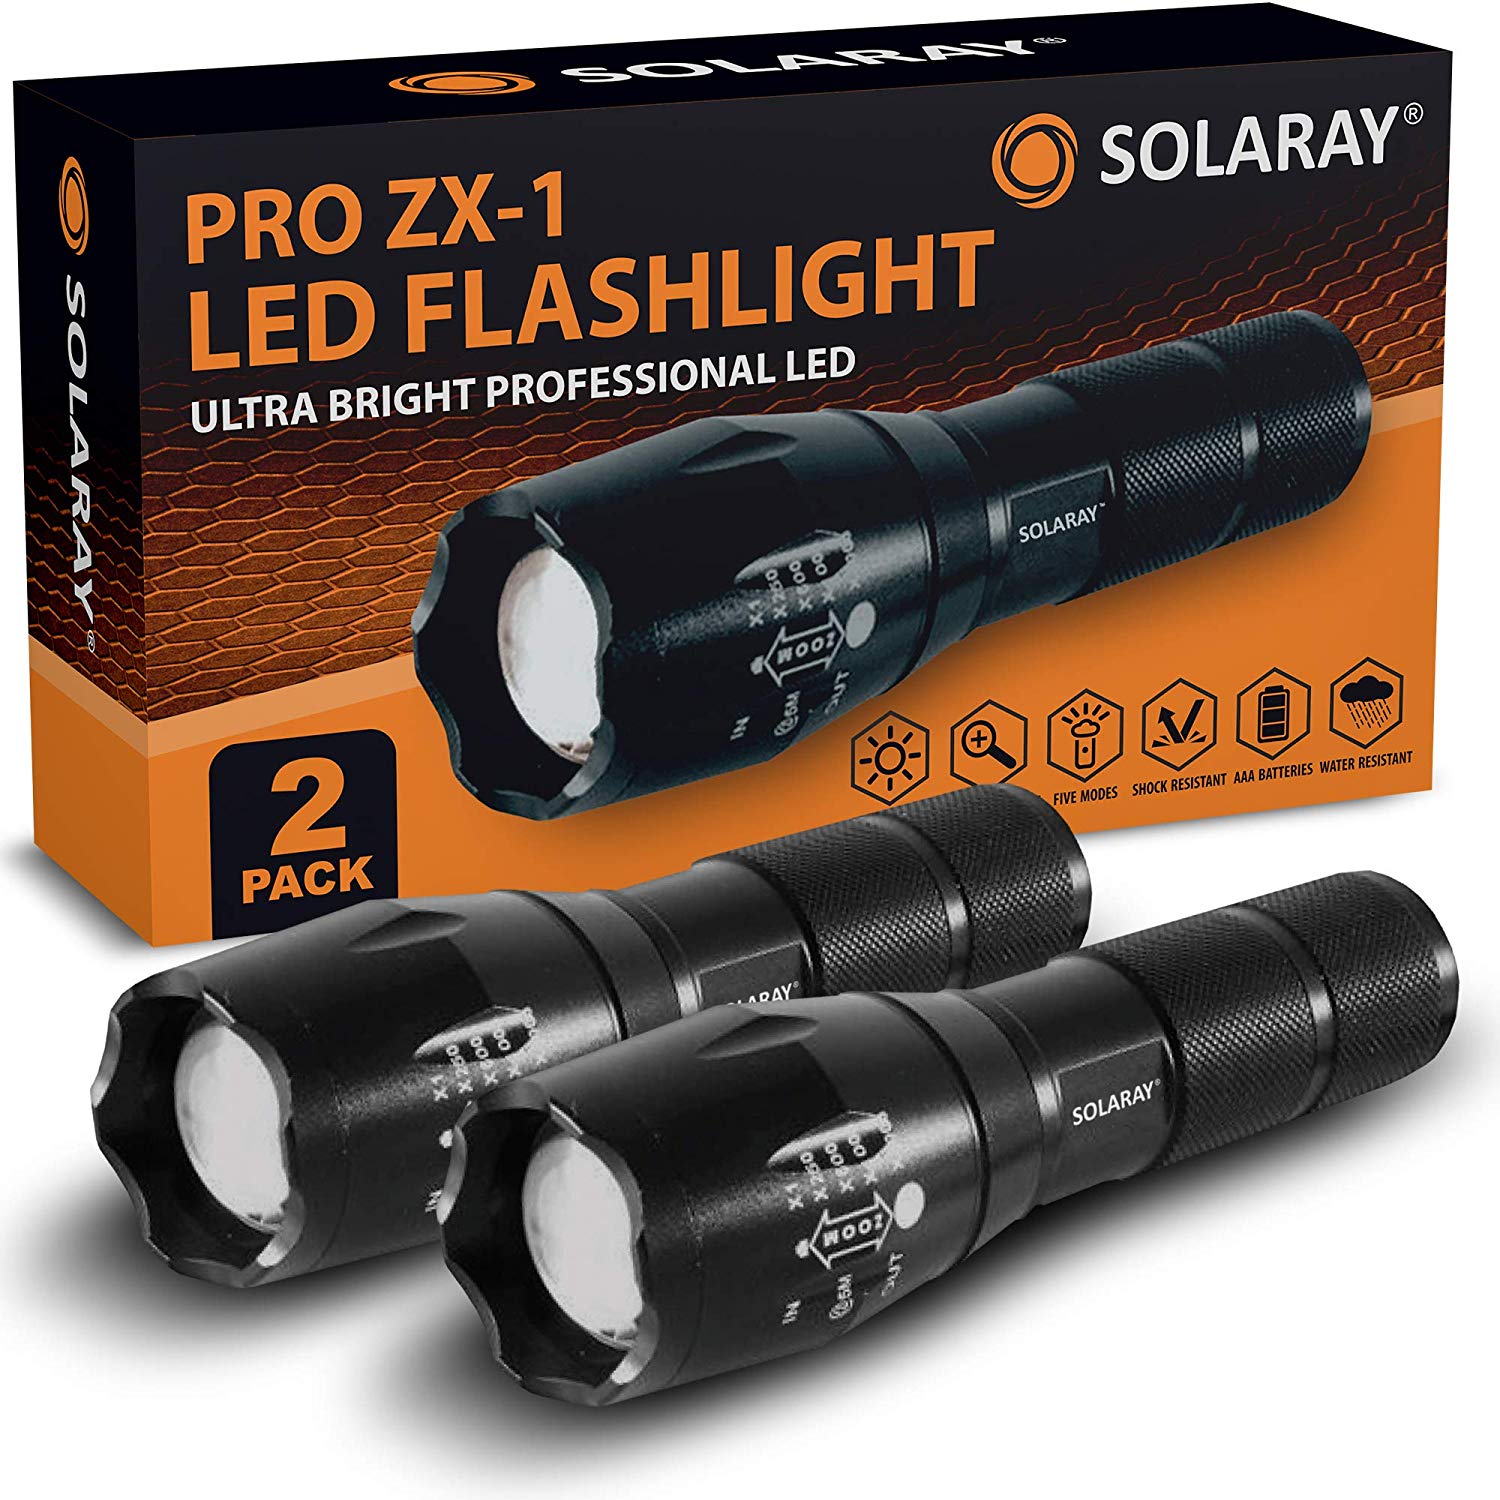 LED Flashlight with Strobe Light - Solaray